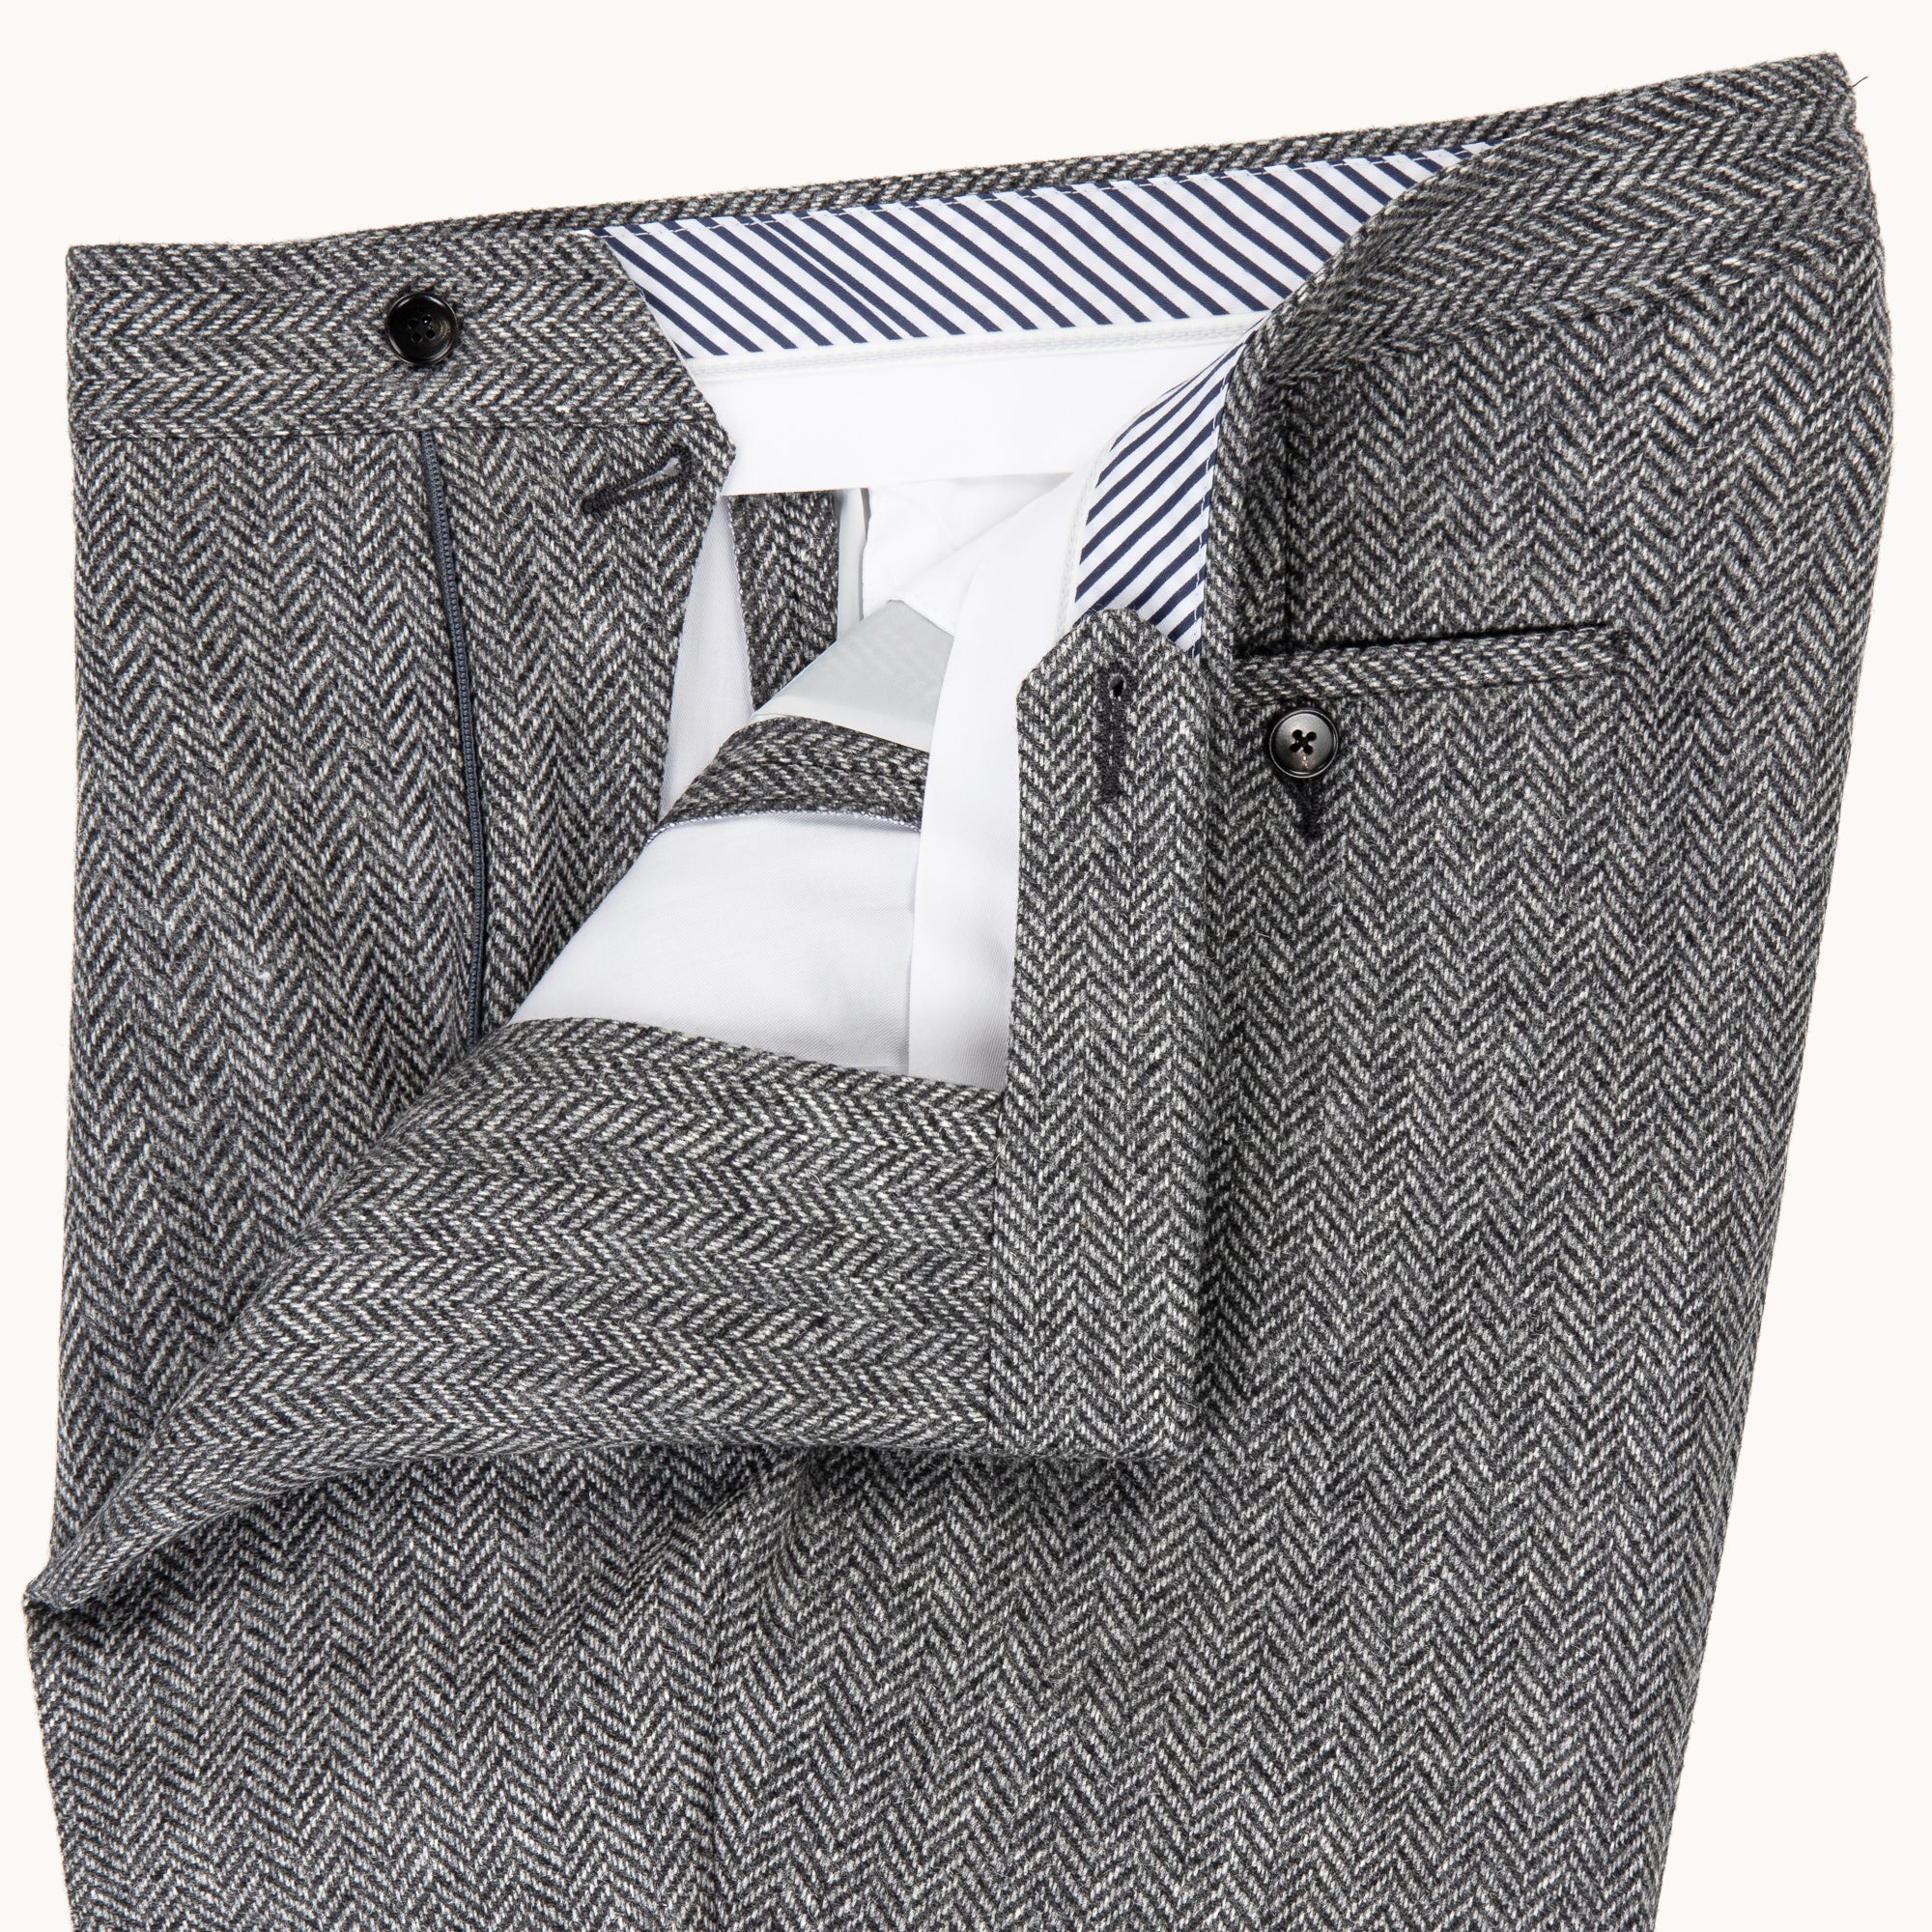 Single Pleat Trouser - Grey Herringbone Wool